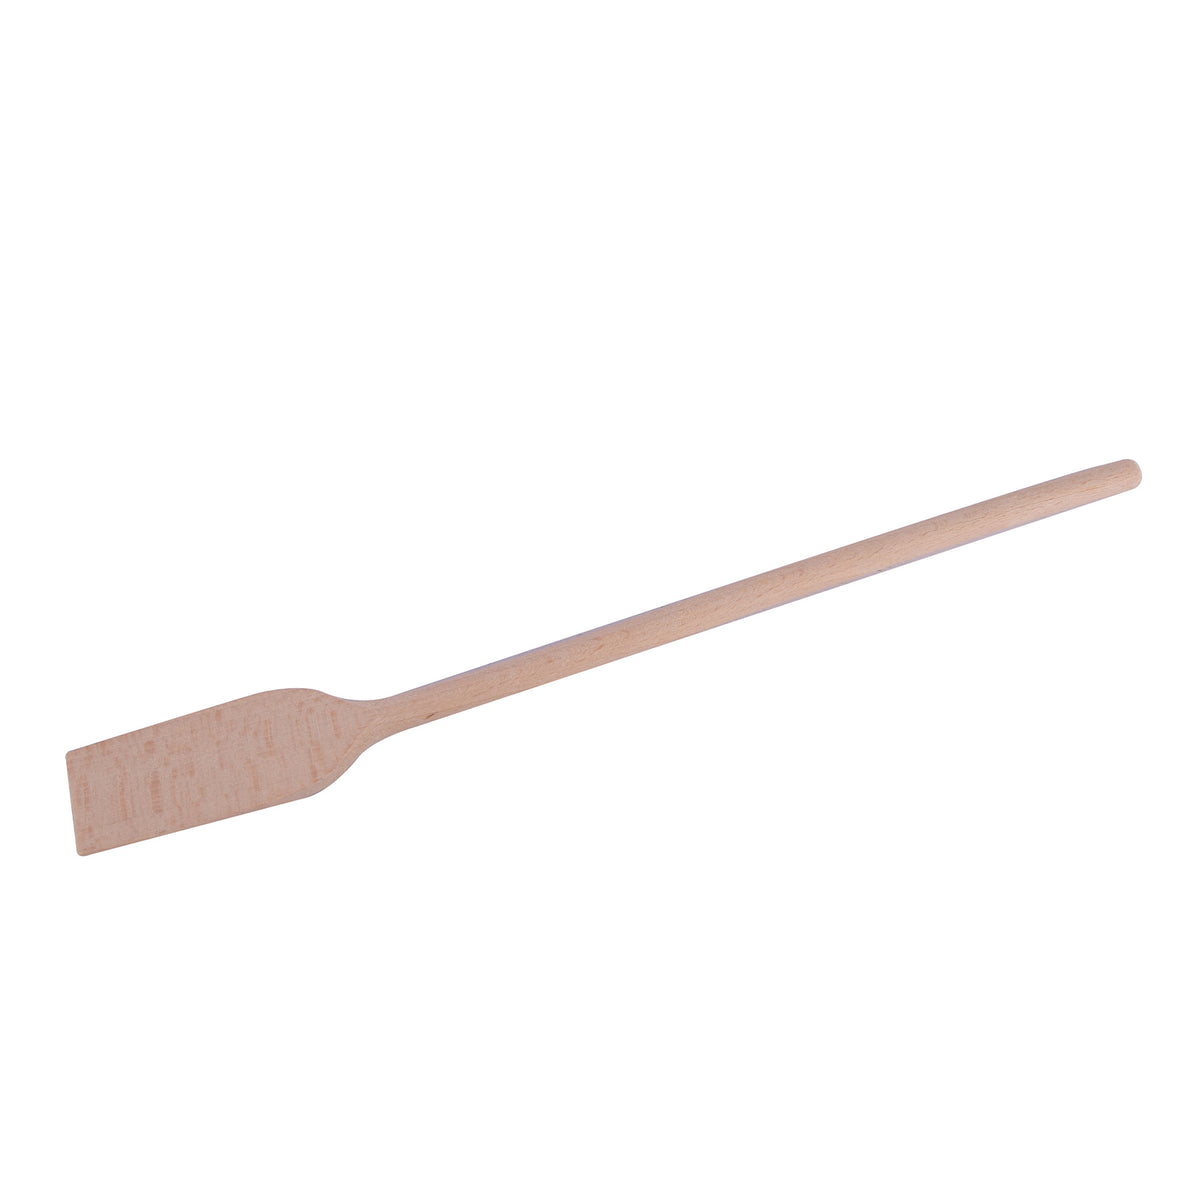 Wooden Narrow spatula, NaturalSize: 35 cm